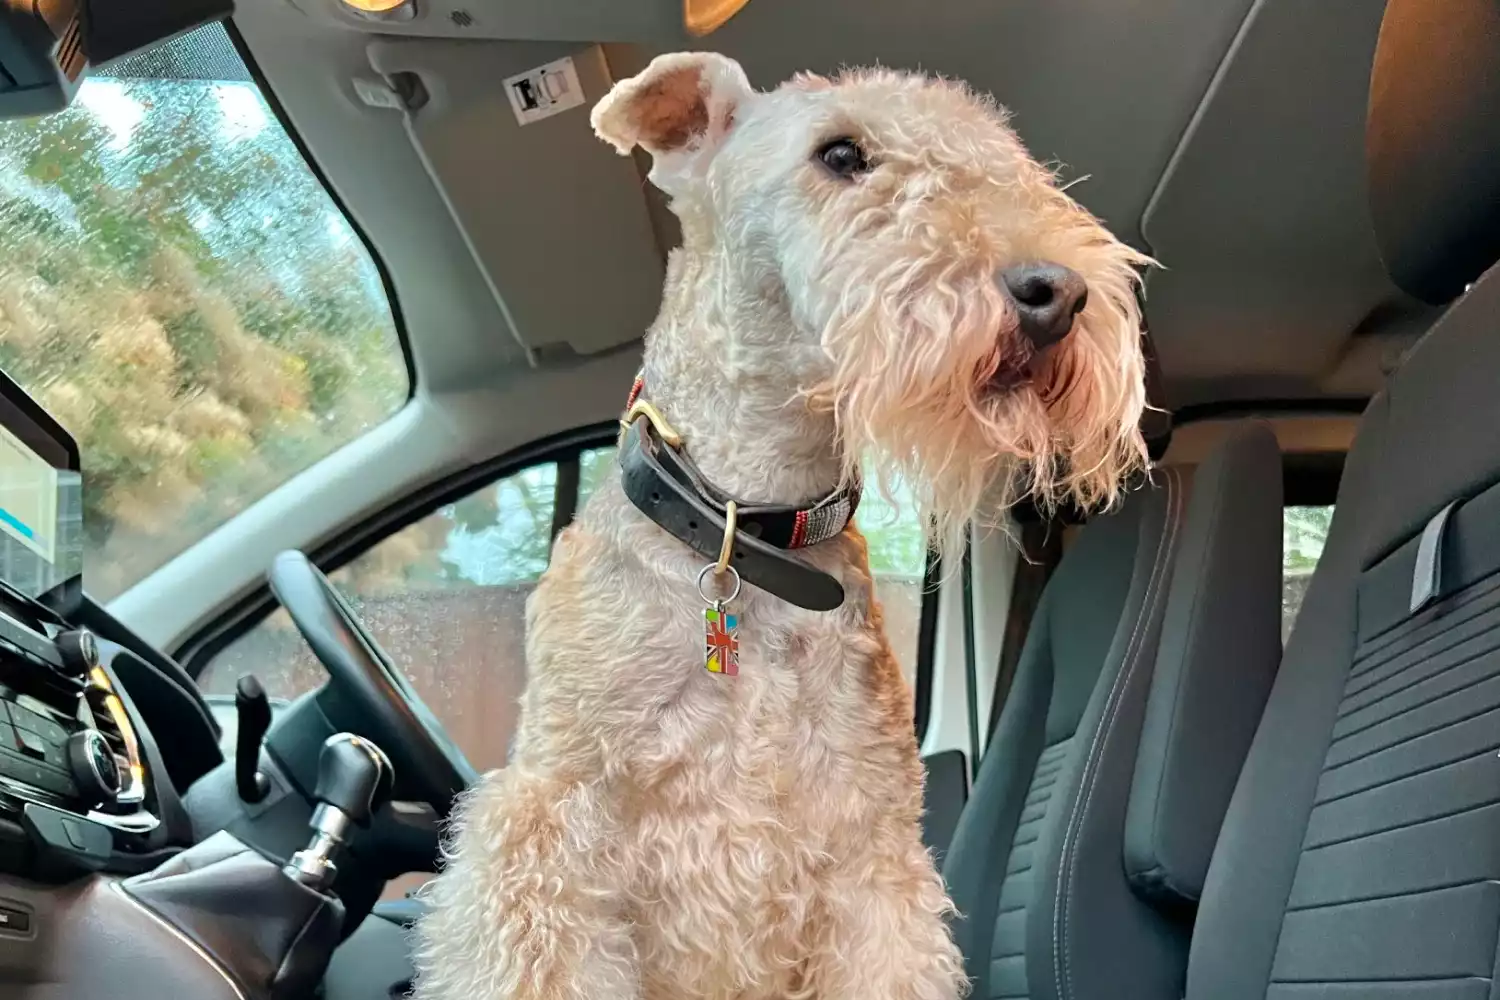 Toyota Corolla Dog Carrier Car Seat for Lakeland Terrier